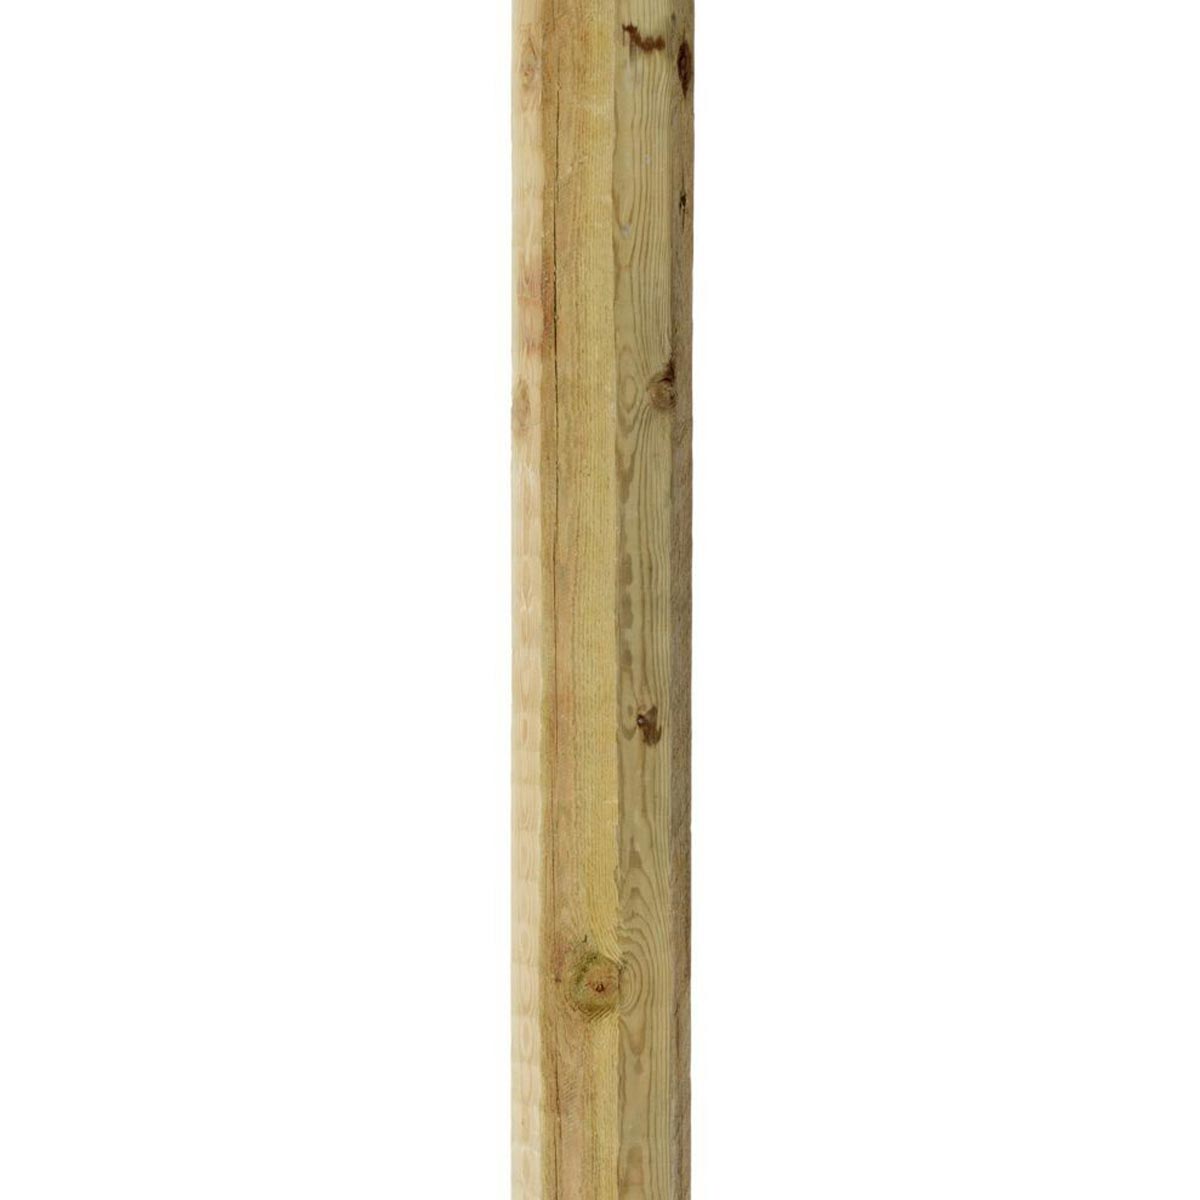 Octo stâlp din lemn traversă din lemn Ø100 mm 350 cm